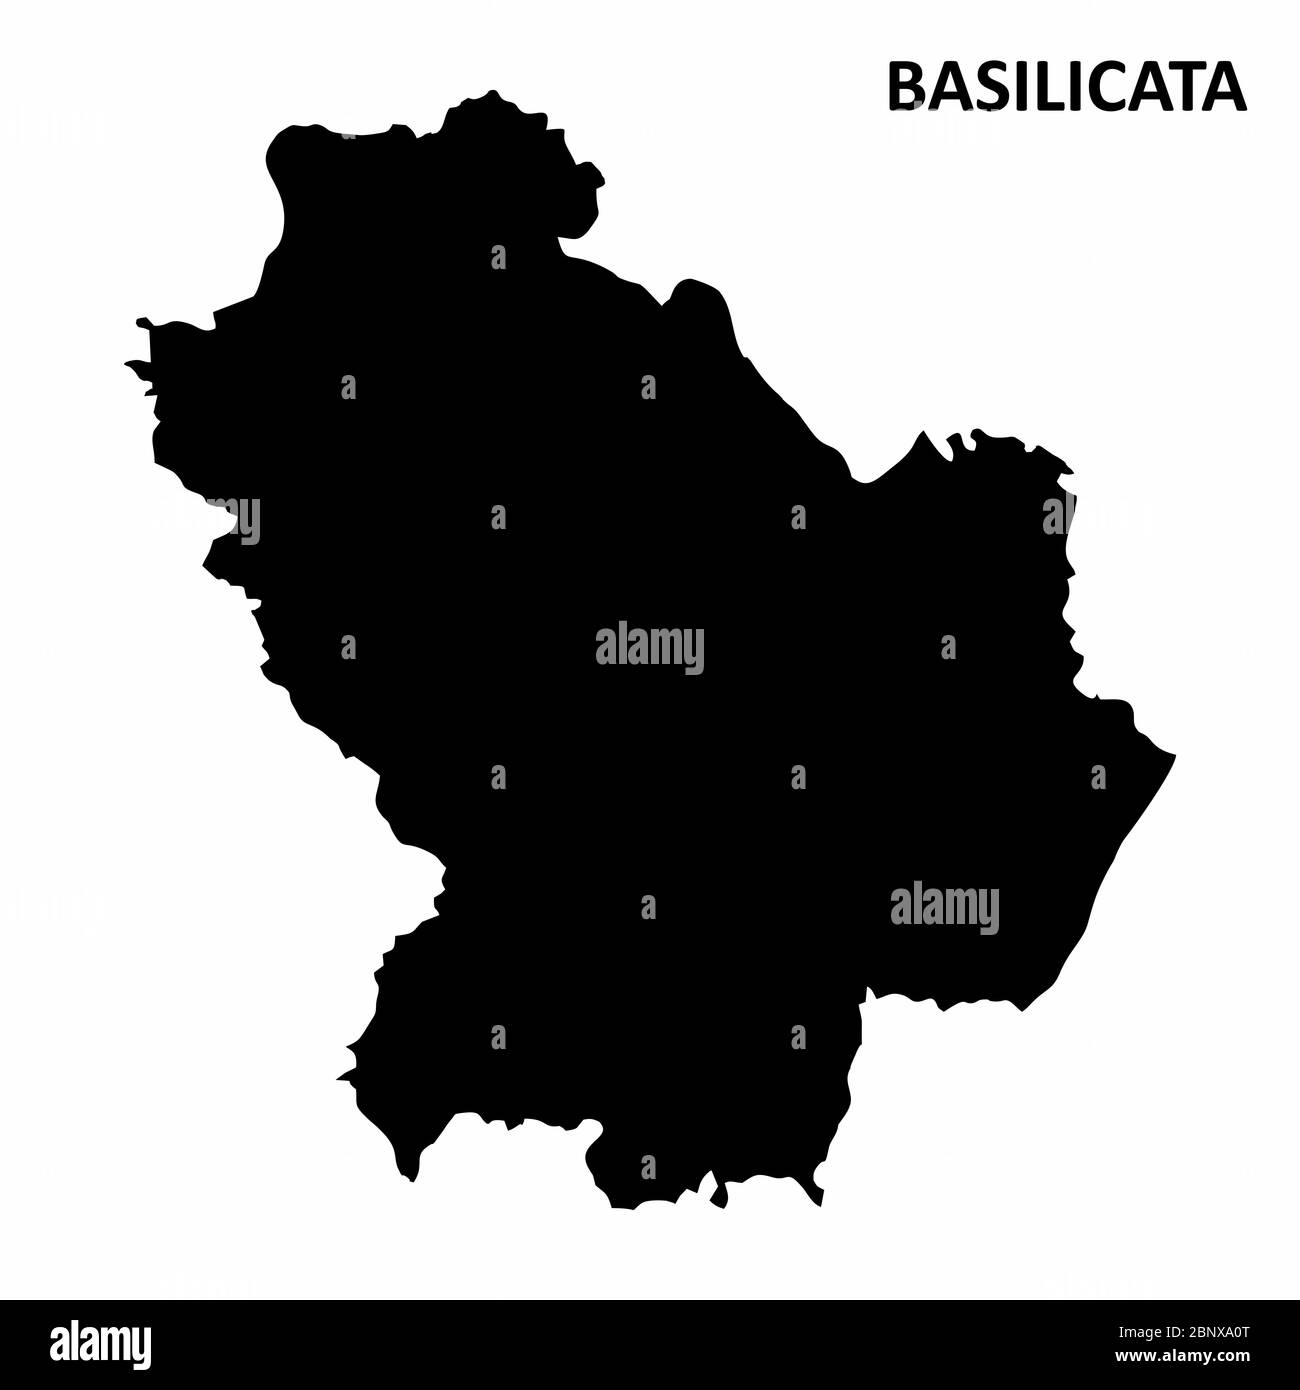 Basilicata region map Stock Vector